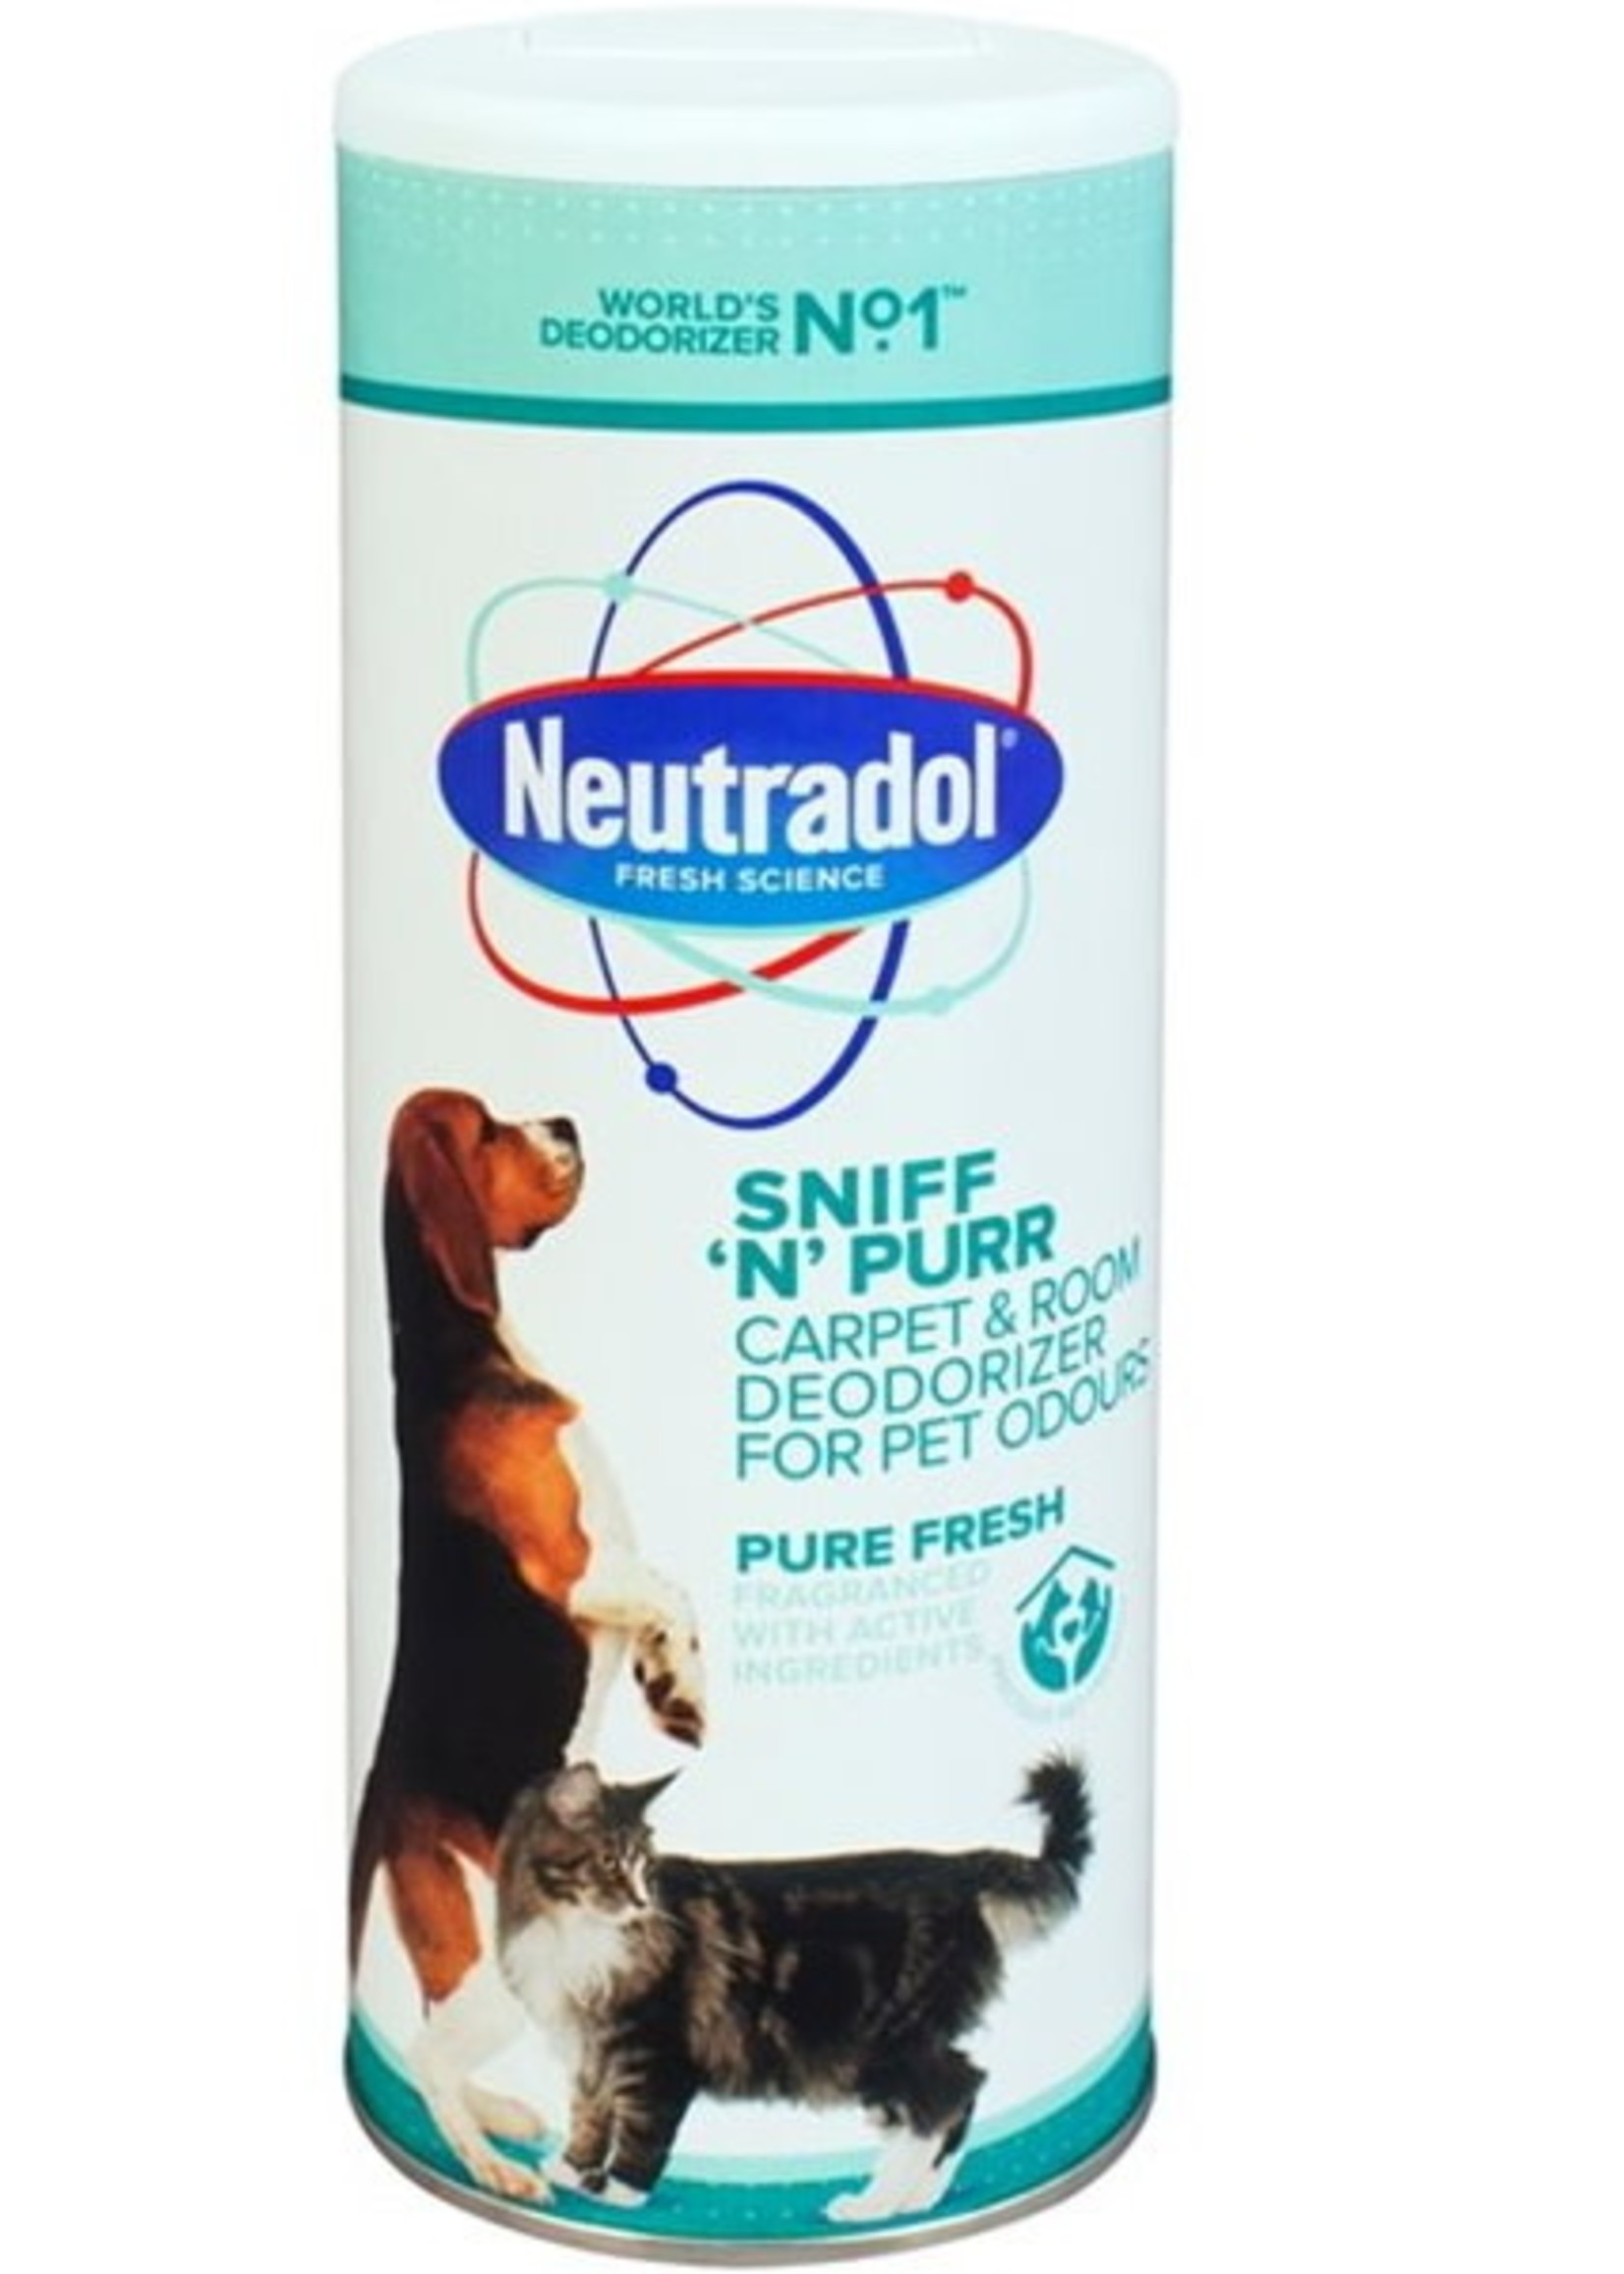 Neutradol Neutradol Sniff 'N' Purr Carpet Deodorizer 350g Pure Fresh